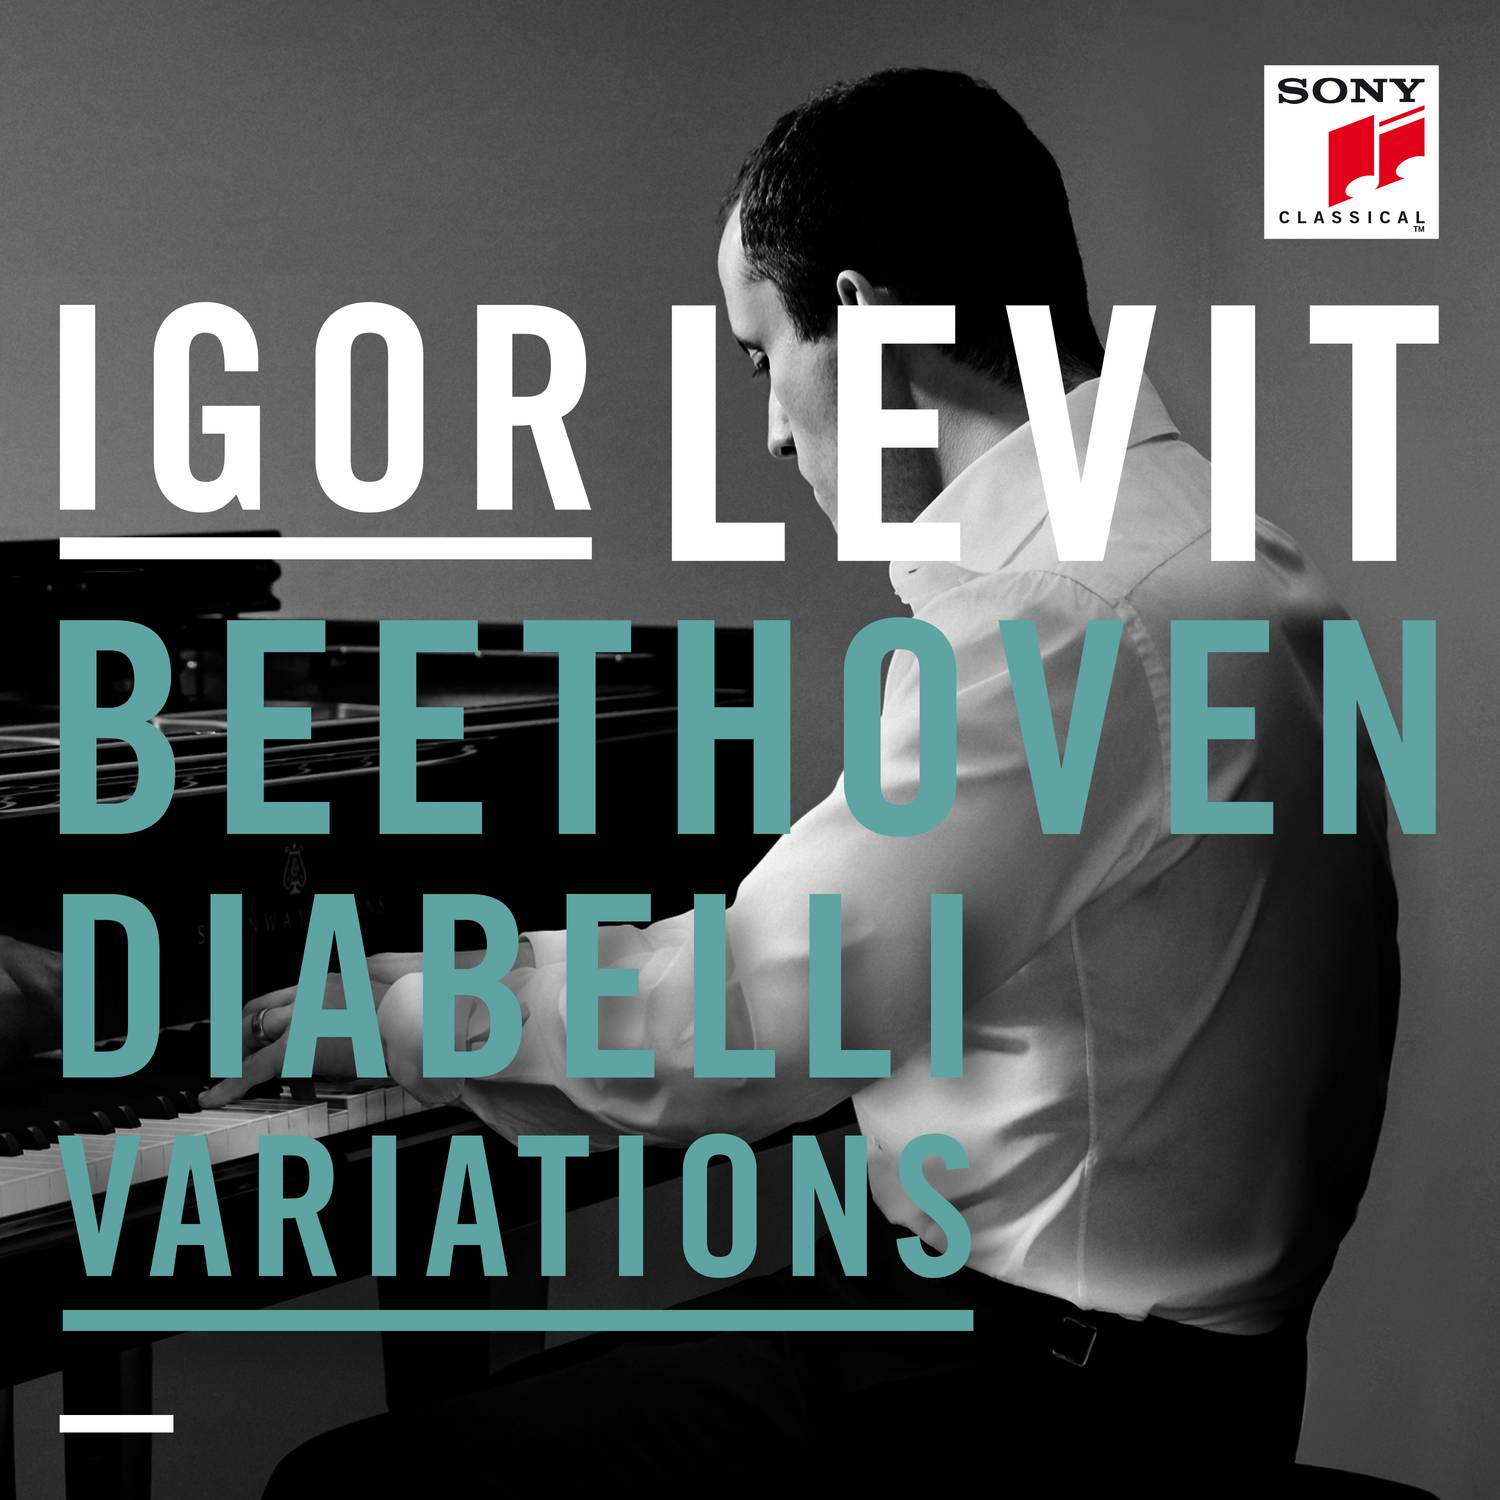 Diabelli Variations - 33 Variations on a Waltz by Anton Diabelli, Op. 120:Var. 18 - Poco moderato